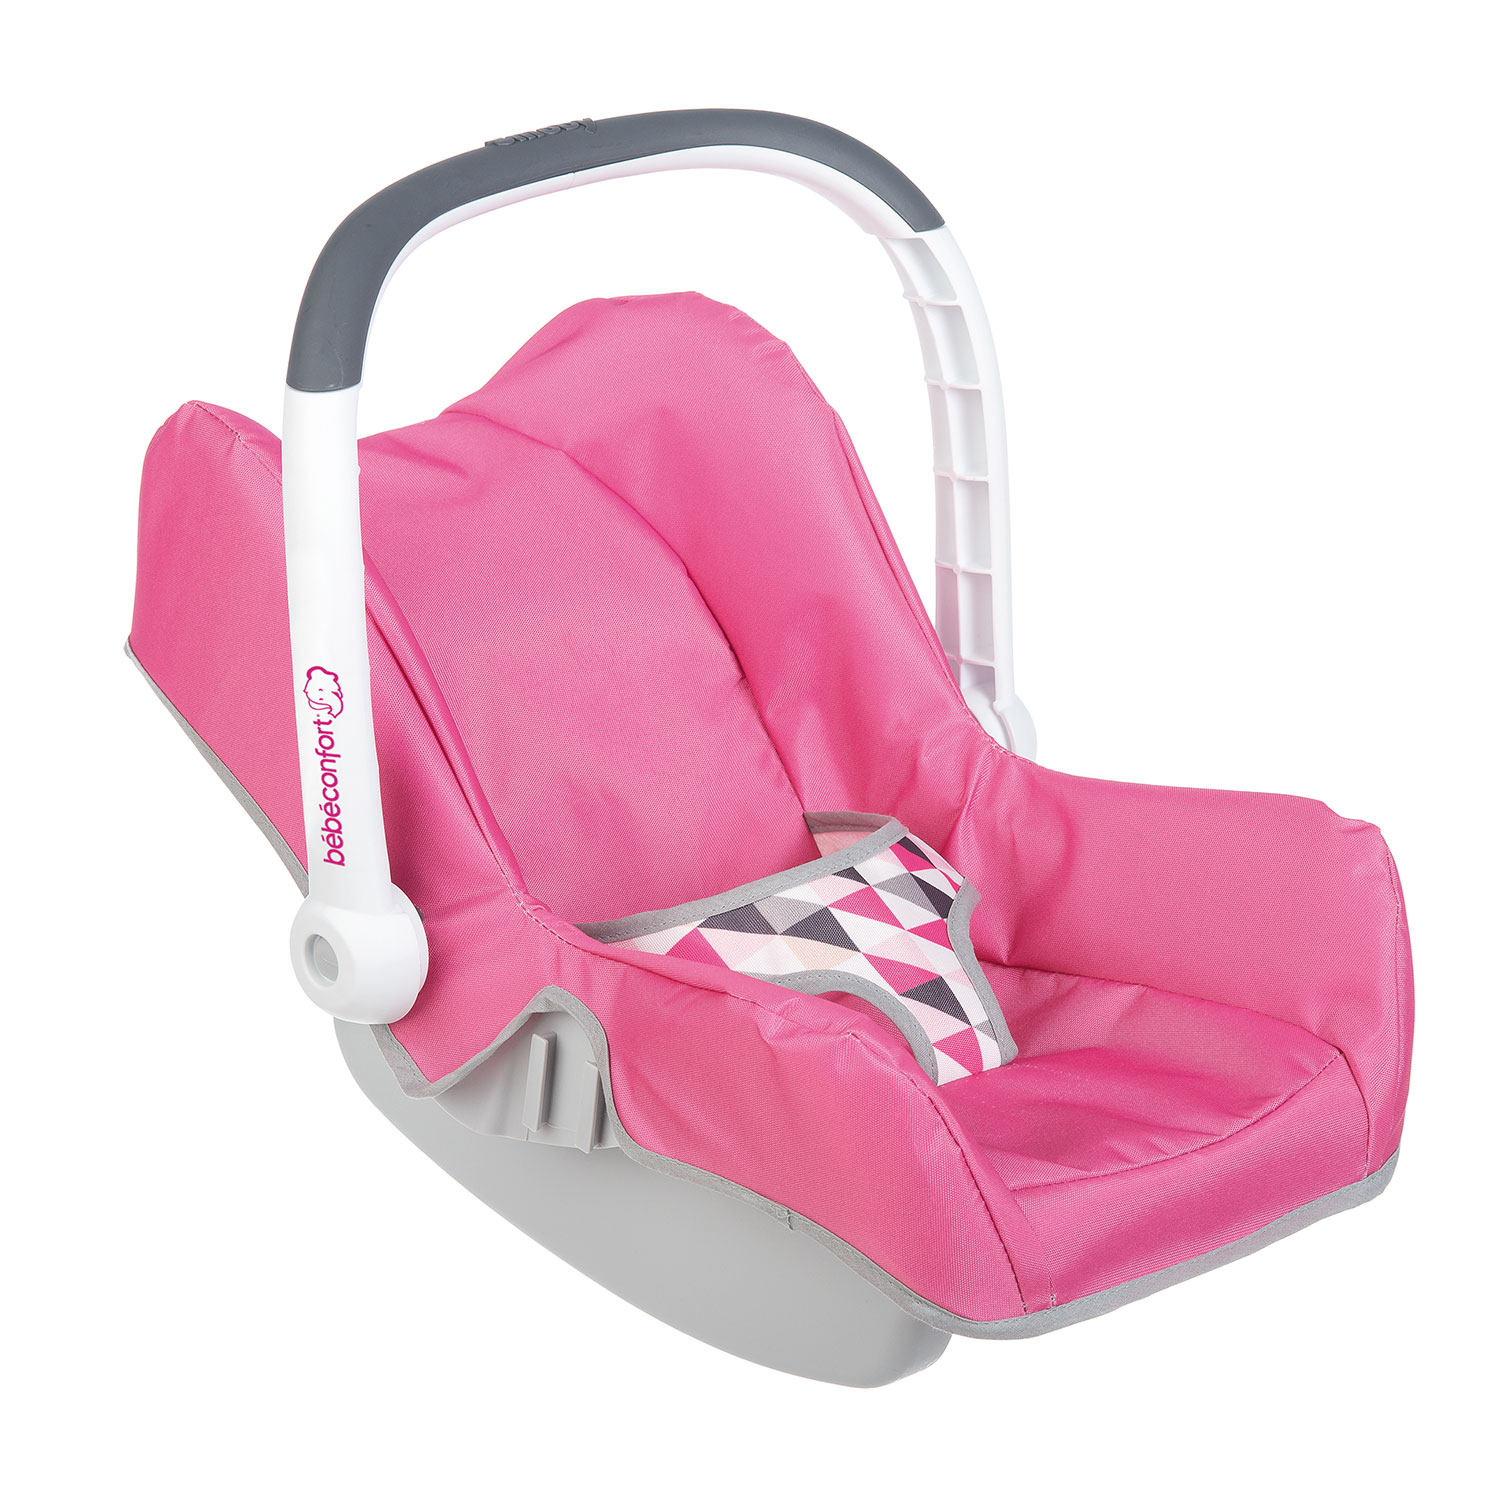 Aan boord Reisbureau Beschuldiging Smoby Baby Confort Maxi-Cosi Car seat | Thimble Toys